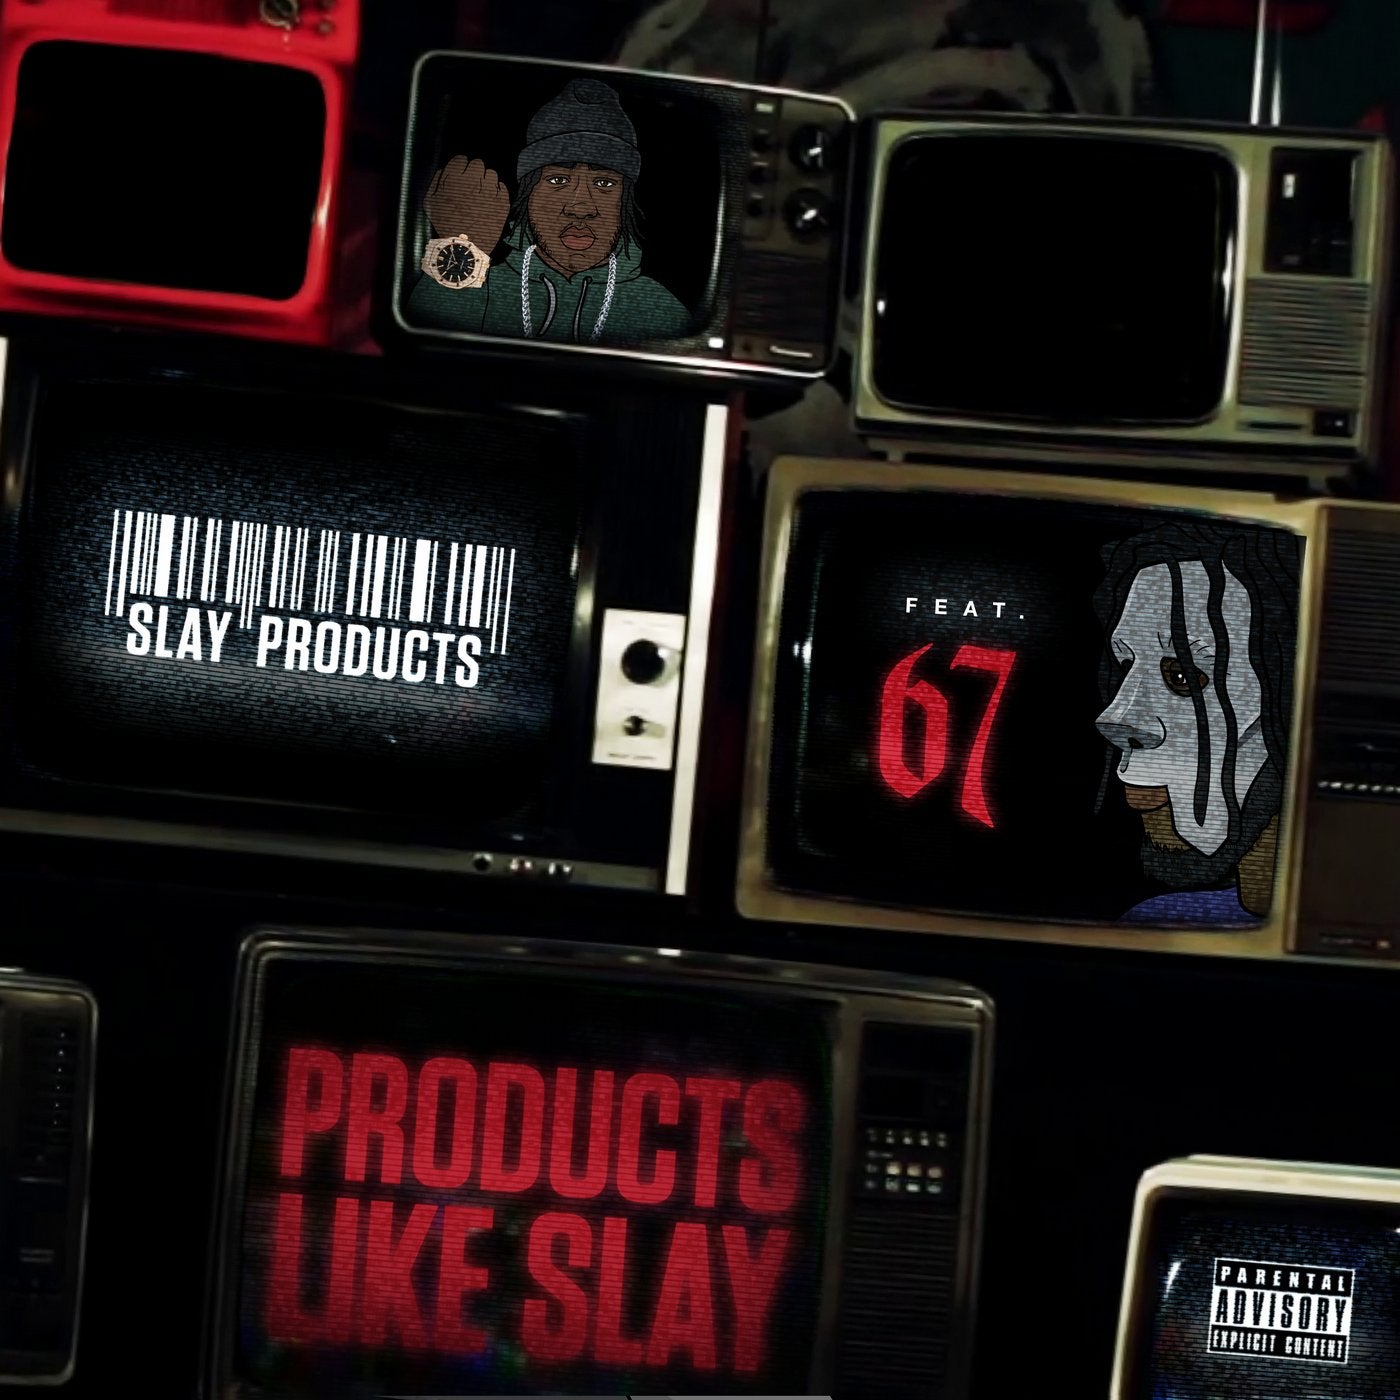 Products Like Slay (feat. 67)